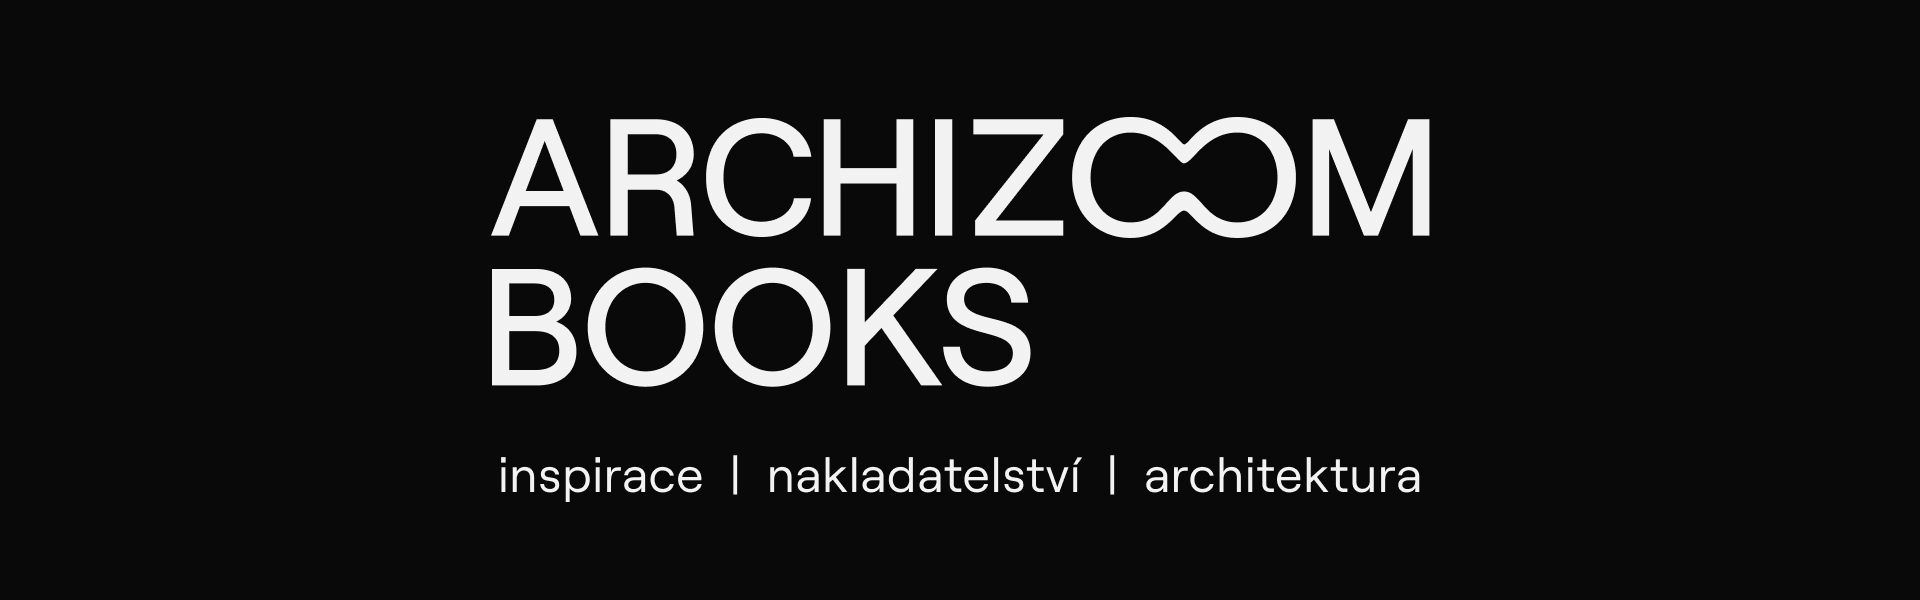 Archizoom books